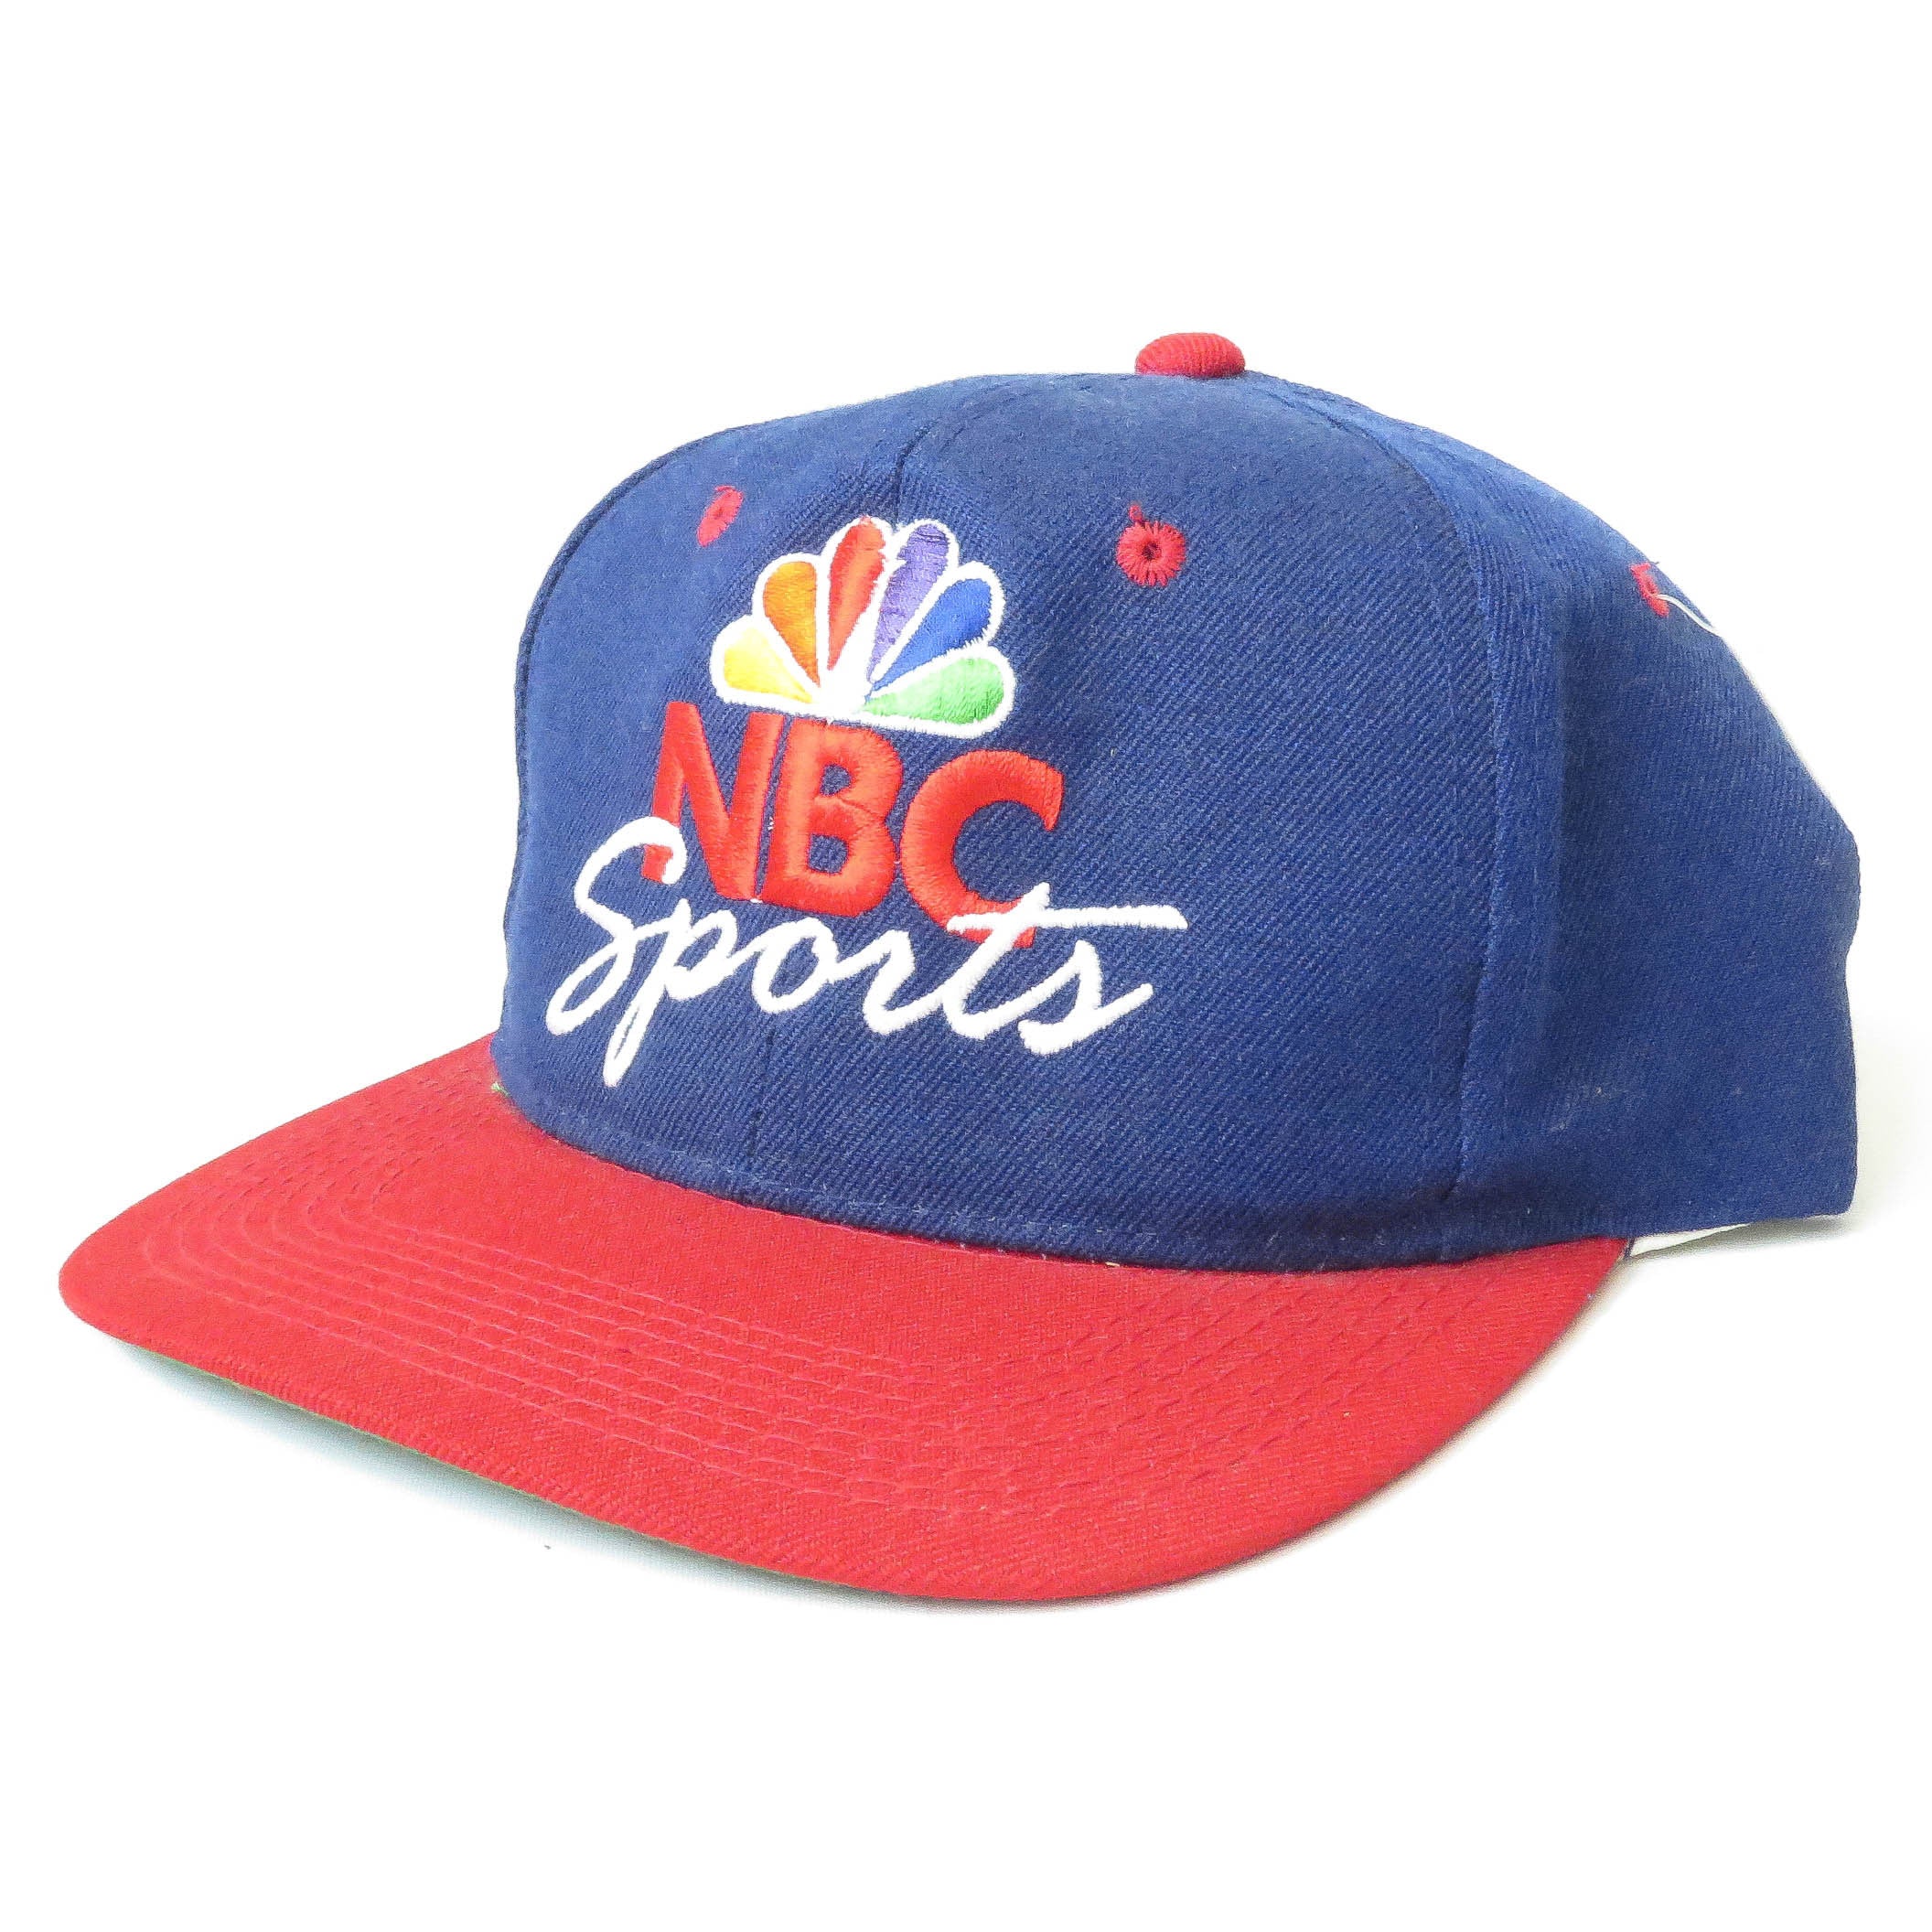 Vintage Sports Specialties NBC Sports Snapback Hat